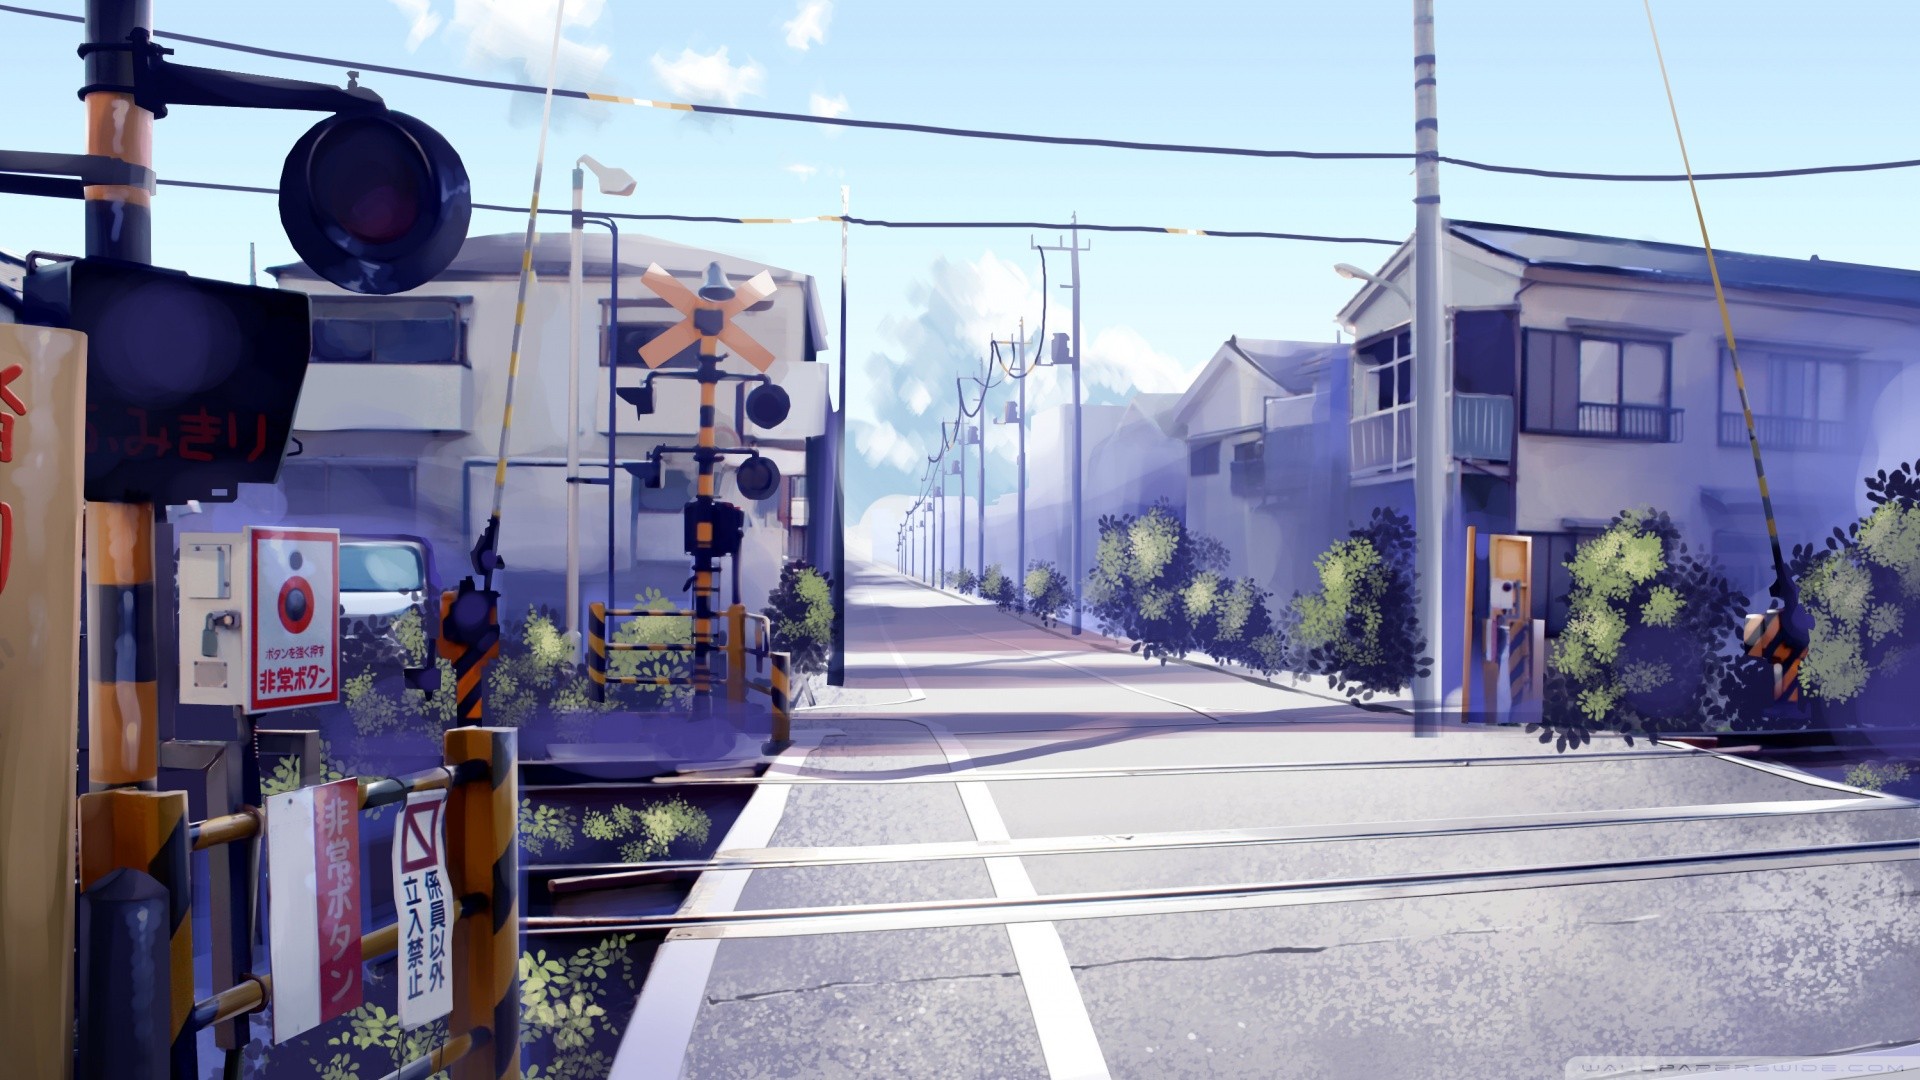 Artwork Street Anime City Road Railway Crossing 1920x1080